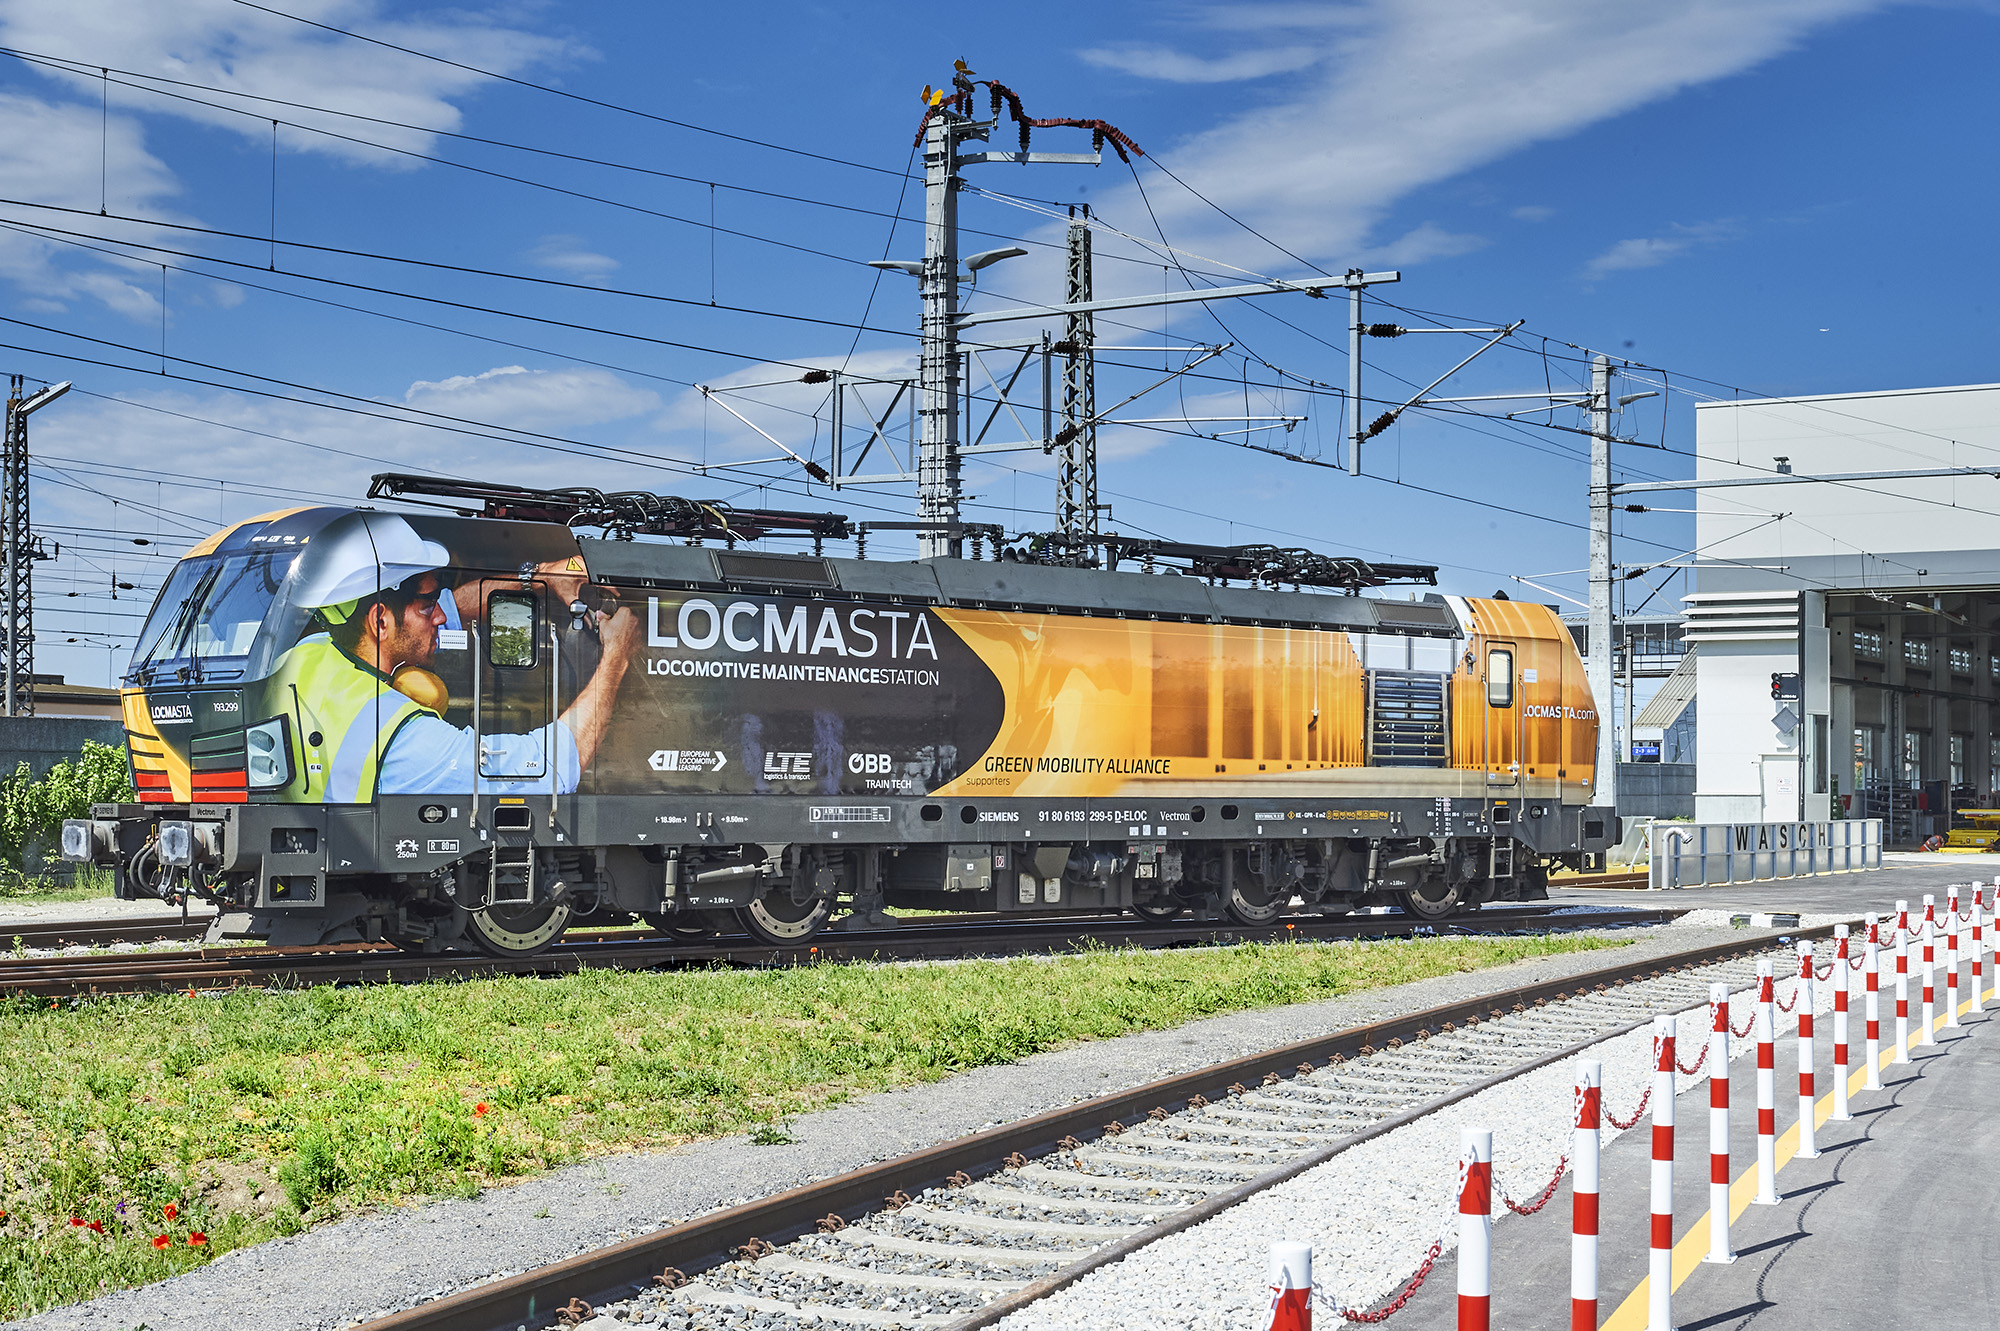 LOCMASTA - locomotive and workshop